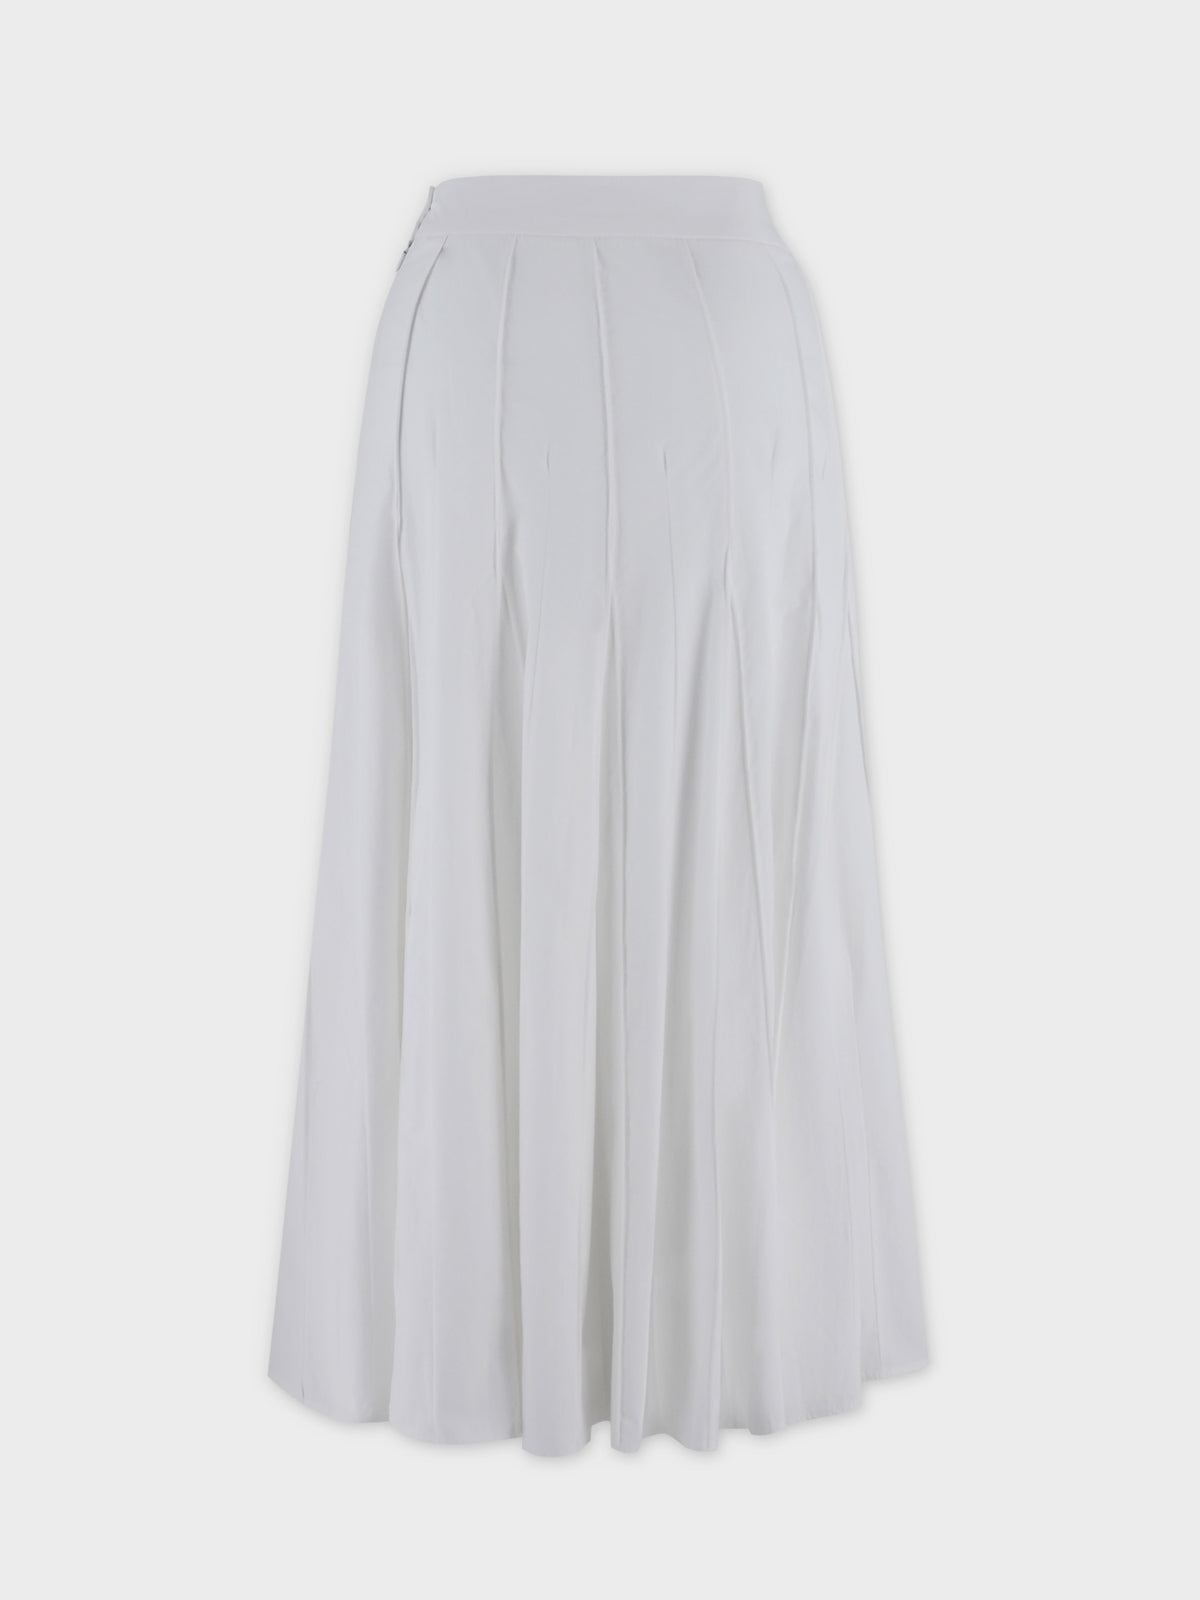 Cotton Pleated Skirt-White